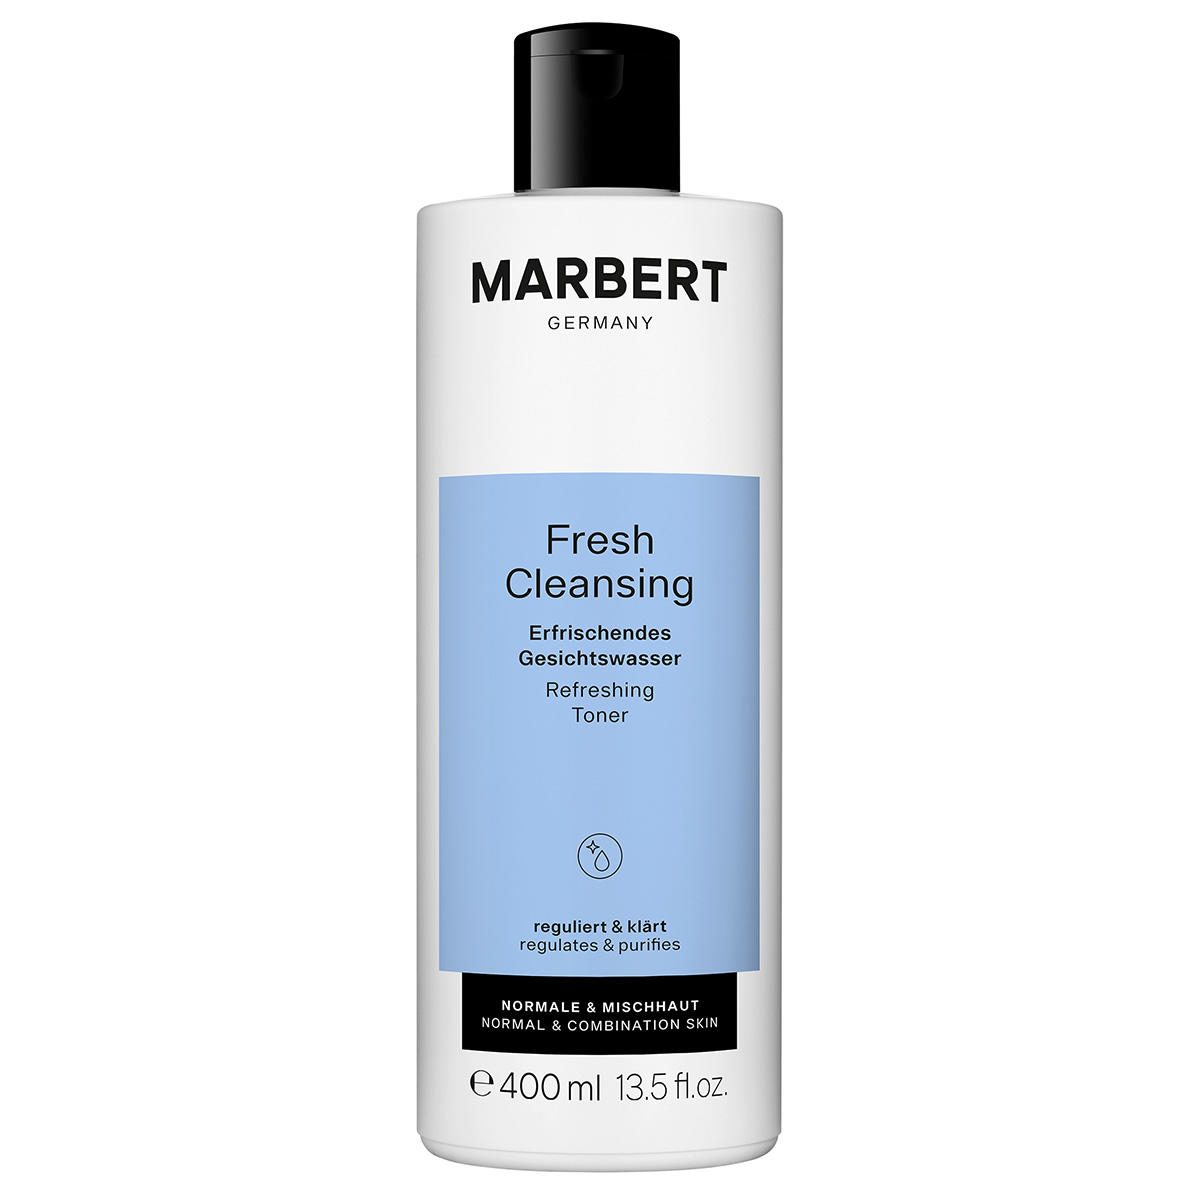 Marbert Fresh Cleansing Tonico rinfrescante per il viso 400 ml - 1